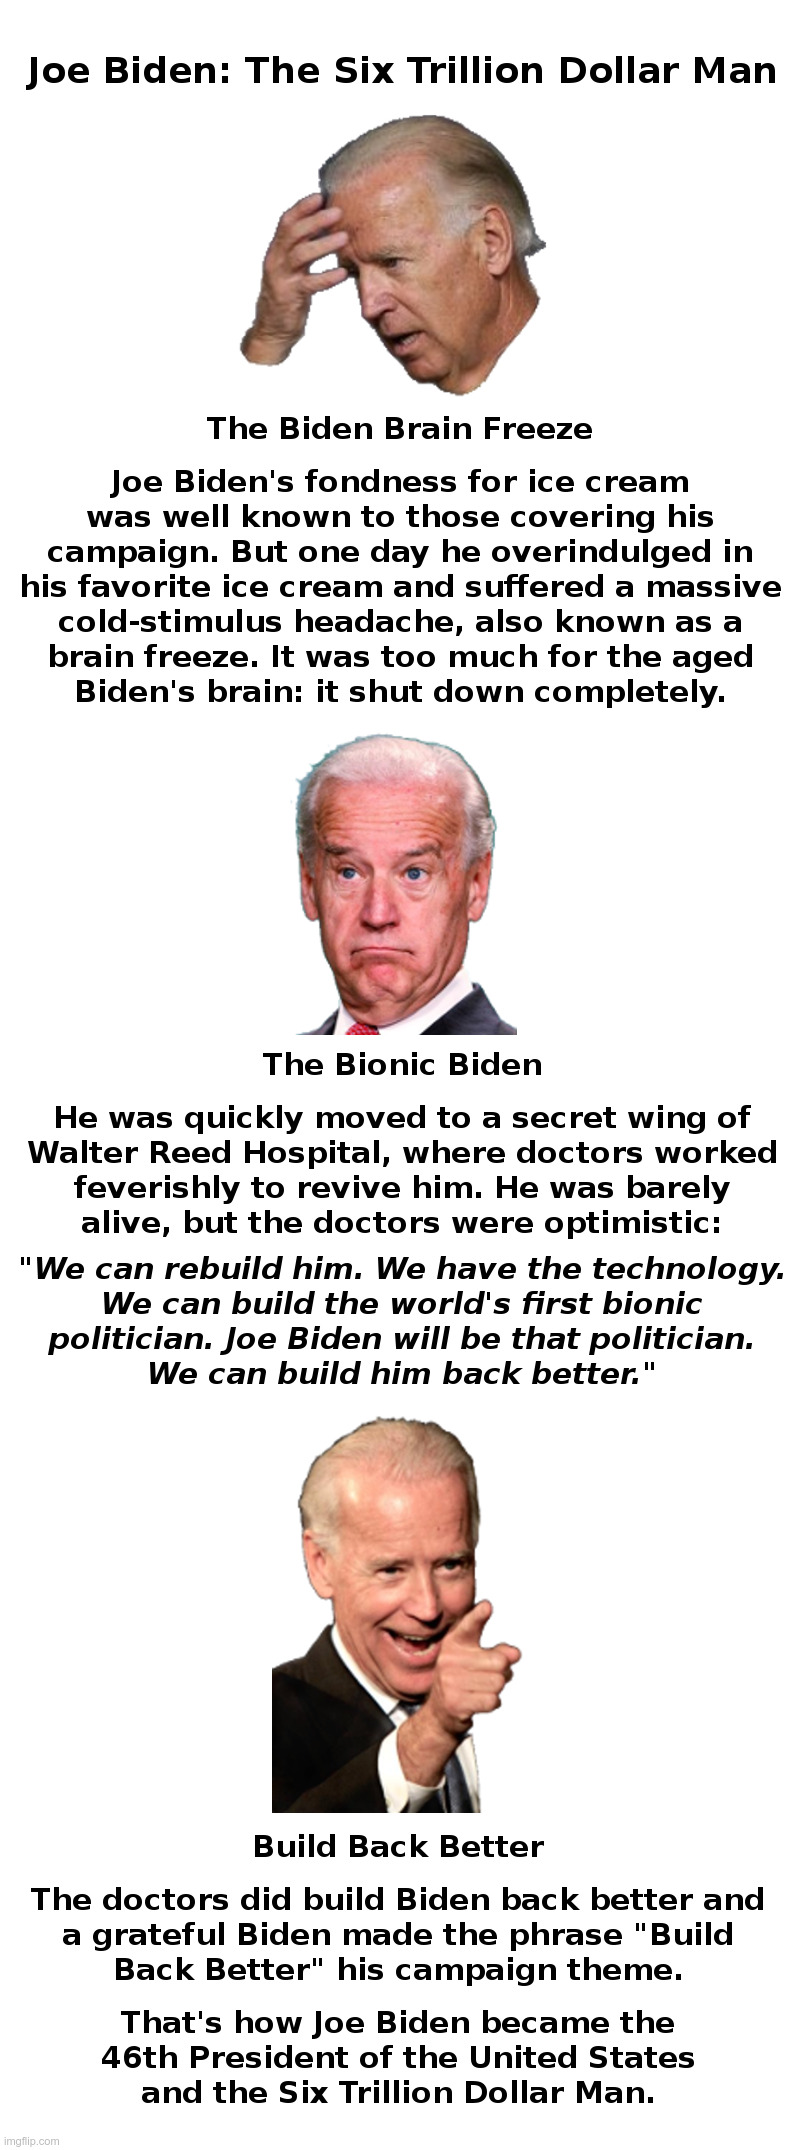 Joe Biden: The Six Trillion Dollar Man﻿ | image tagged in joe biden,ice cream,brain freeze,six million dollar man,six trillion dollar man,budget | made w/ Imgflip meme maker